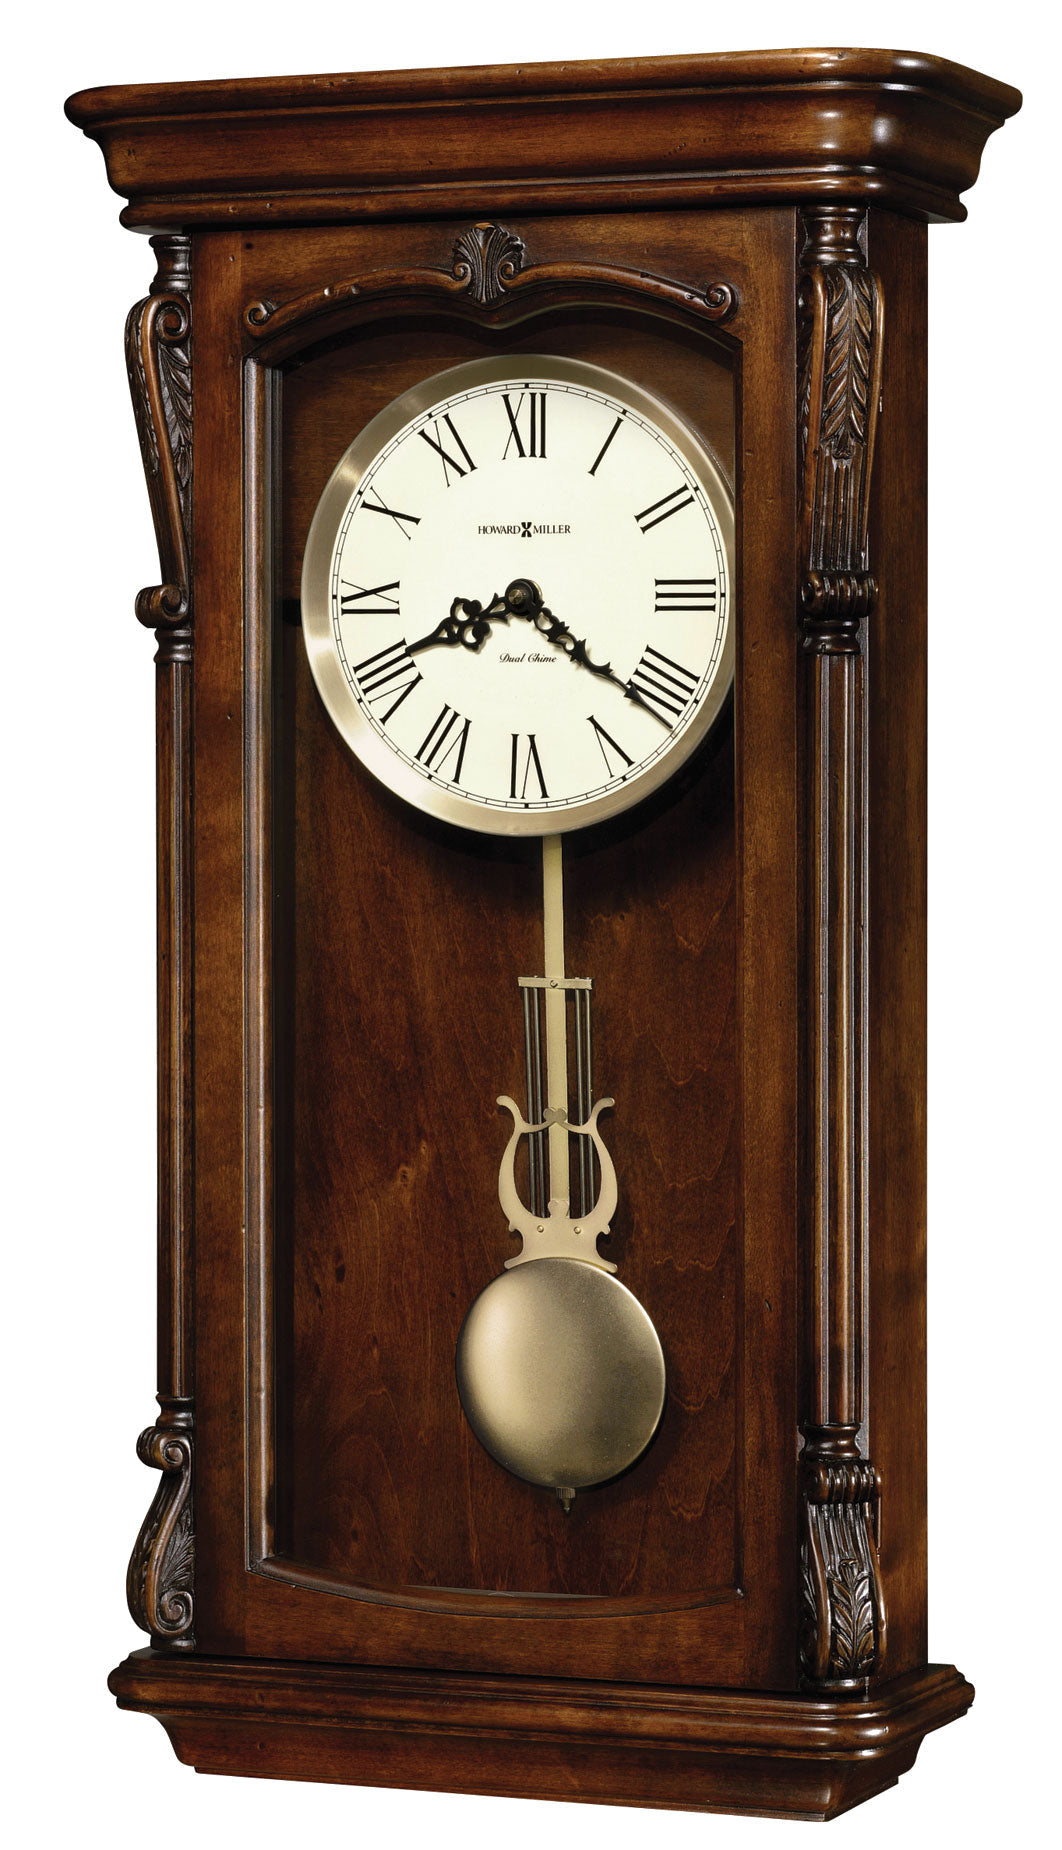 Henderson Wall Clock by Howard Miller